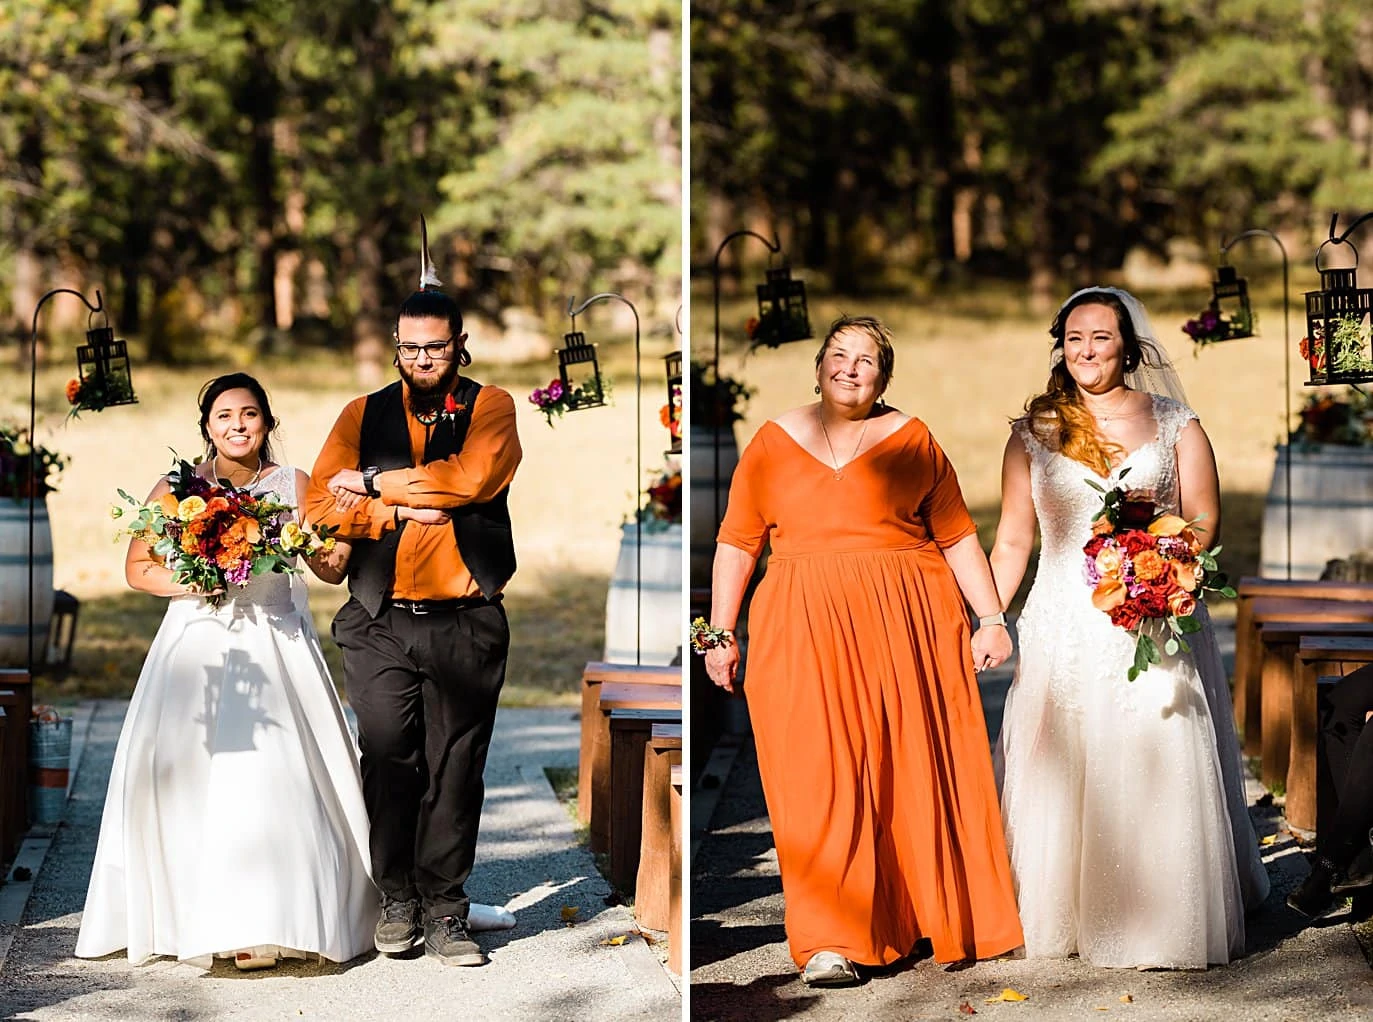 brides walk down aisle on wedding day at fall Colorado wedding by Denver wedding photographer Jennie Crate